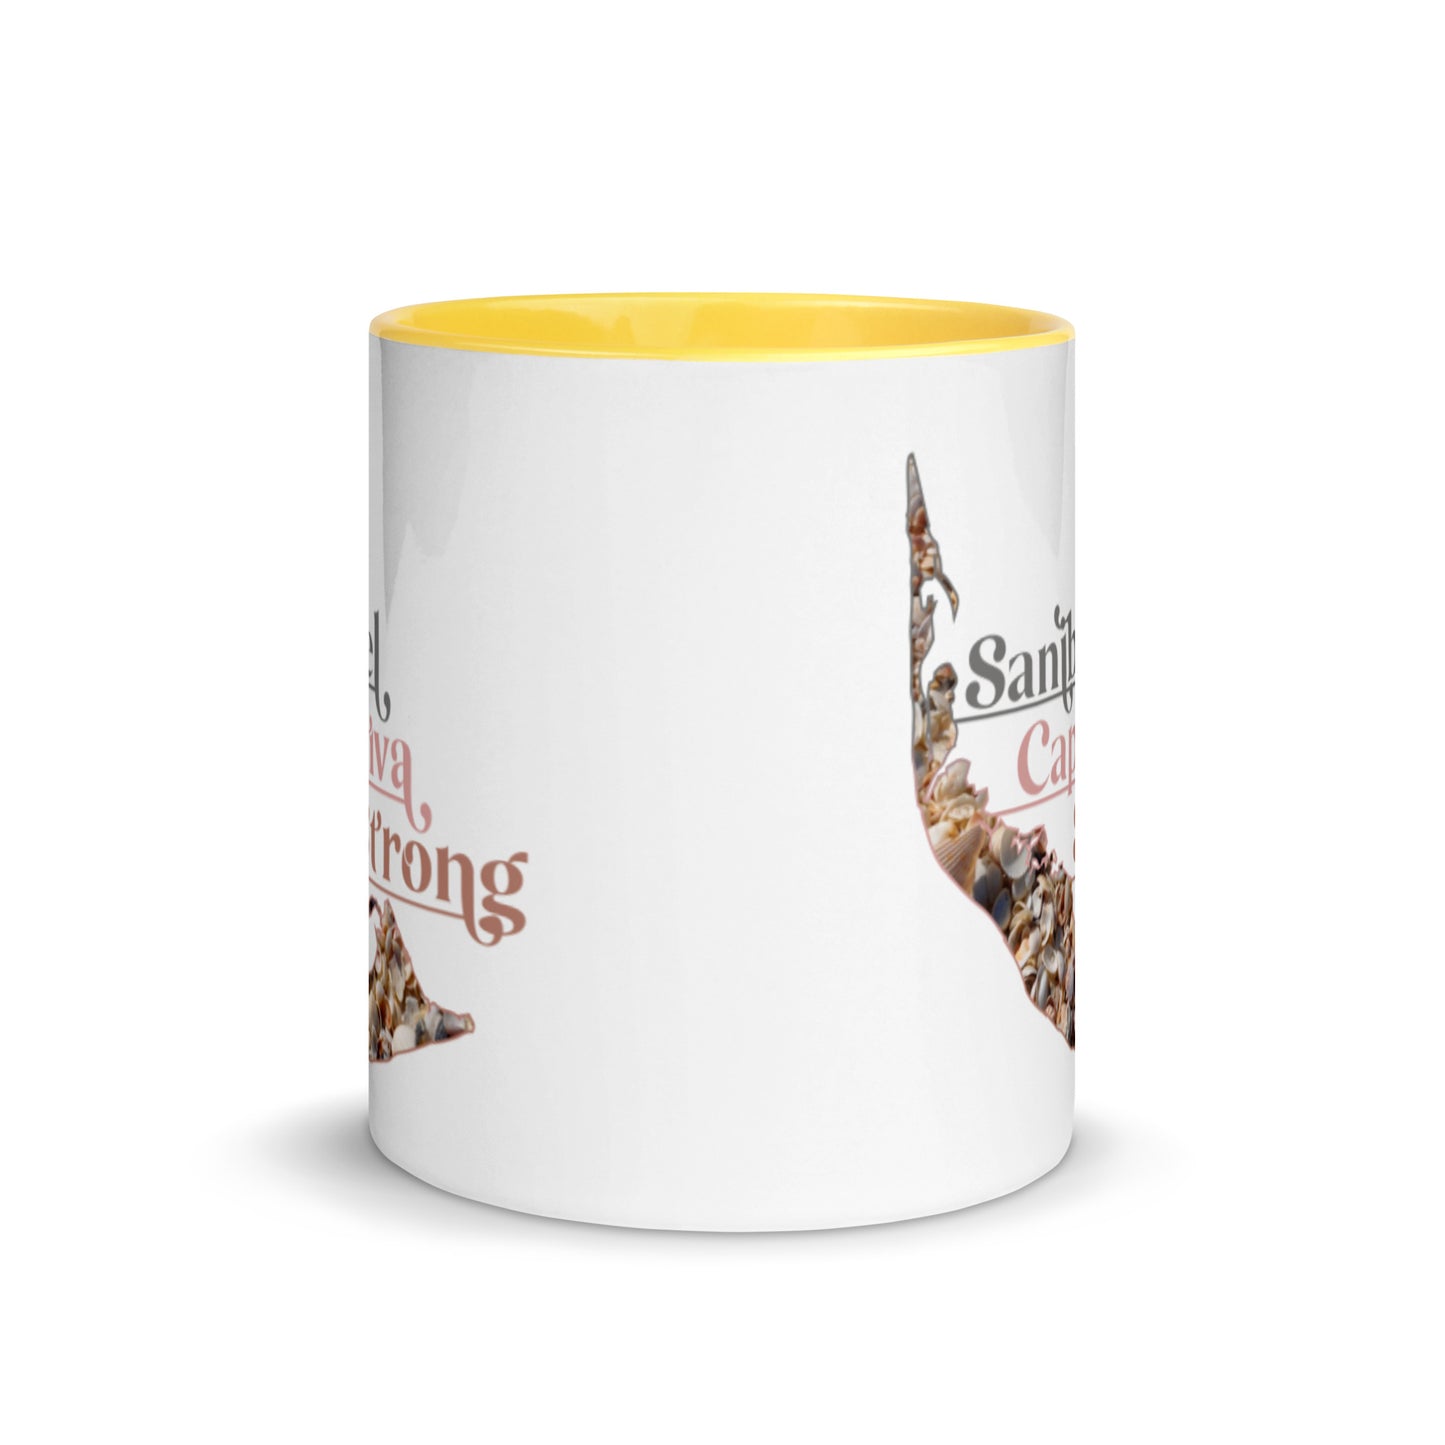 Sanibel Captiva Strong Ceramic Mug